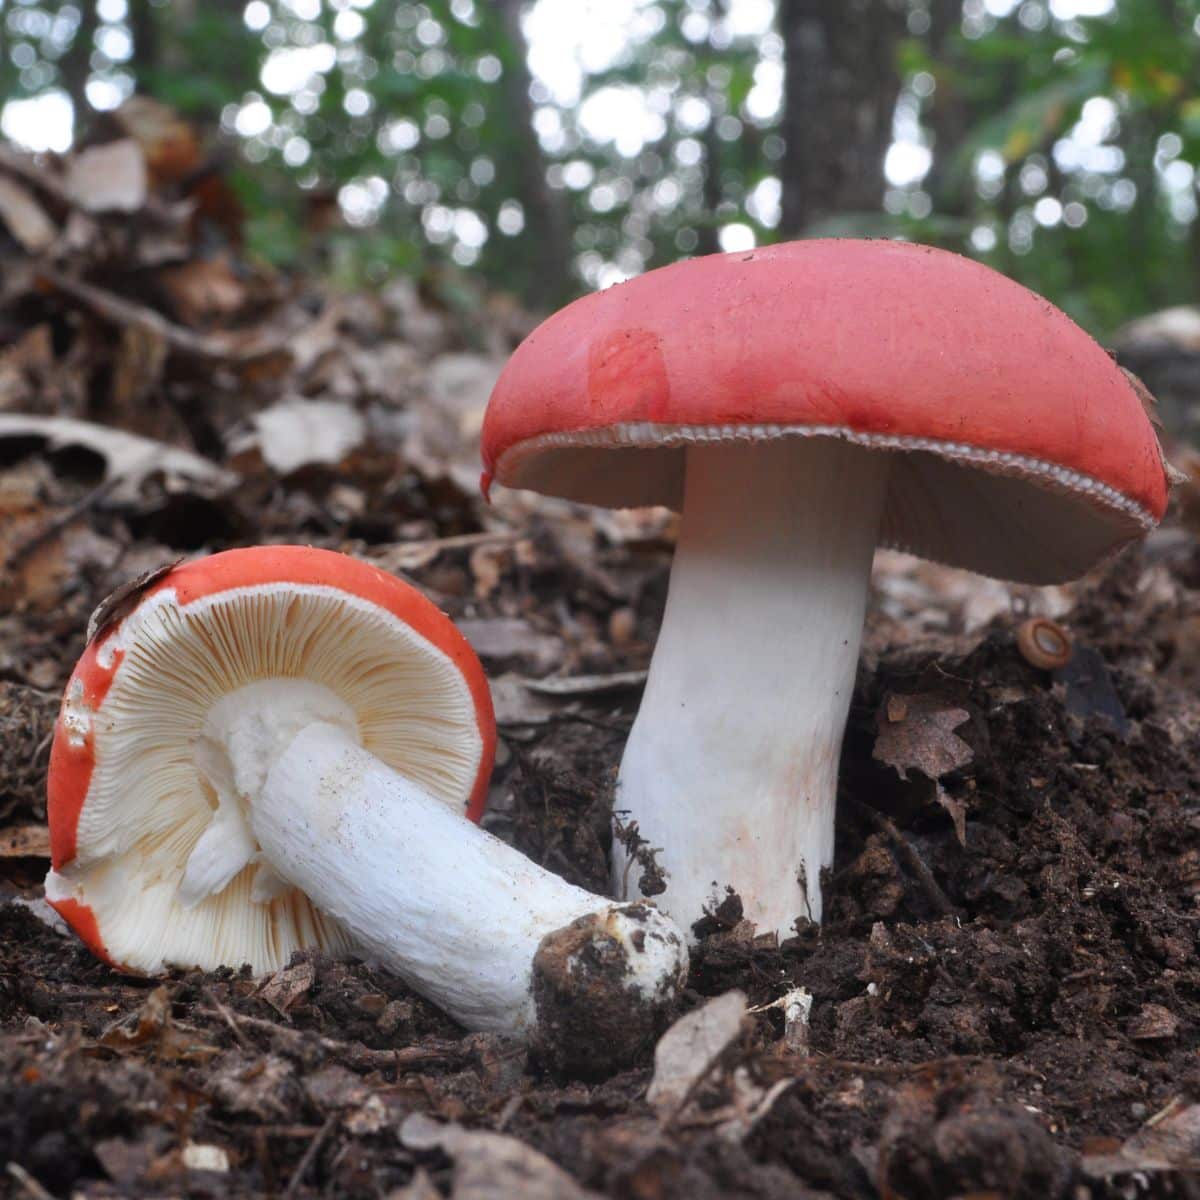 Russula mushrooms identification